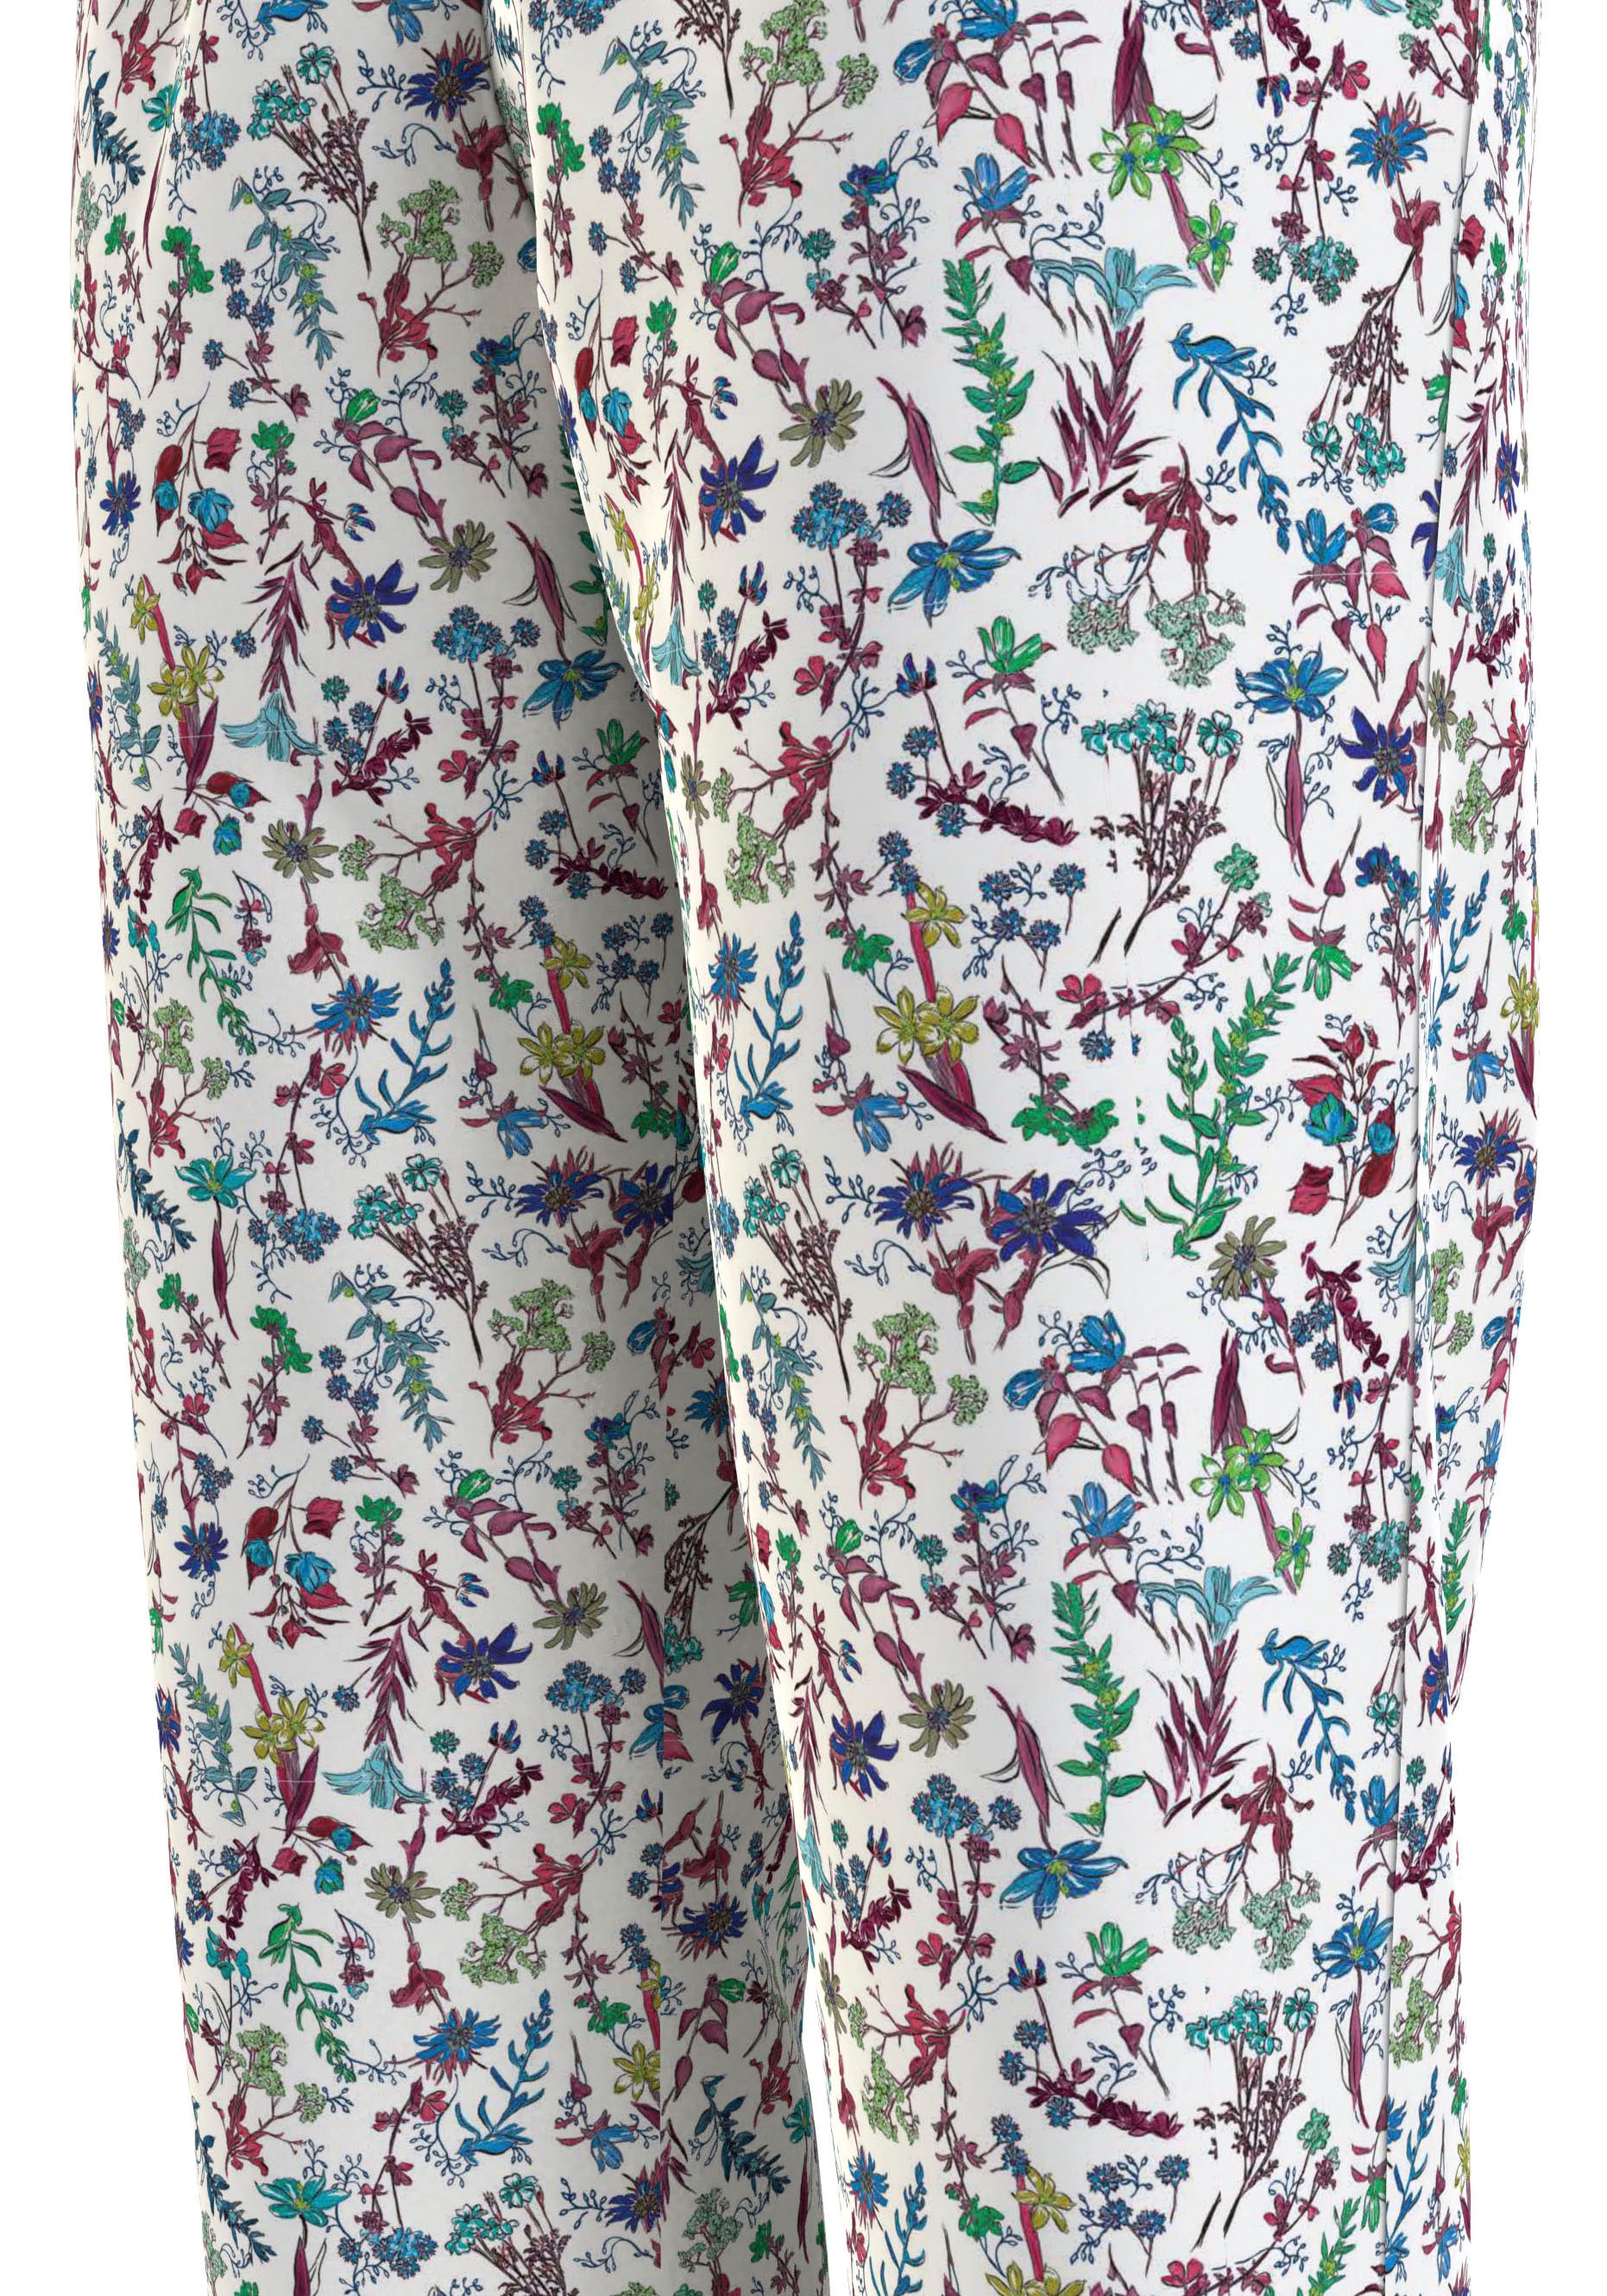 »TH bestellen floralem bei OTTO in WOVEN Schlafhose Tommy PANTS«, Hilfiger farbefrohem Muster Underwear